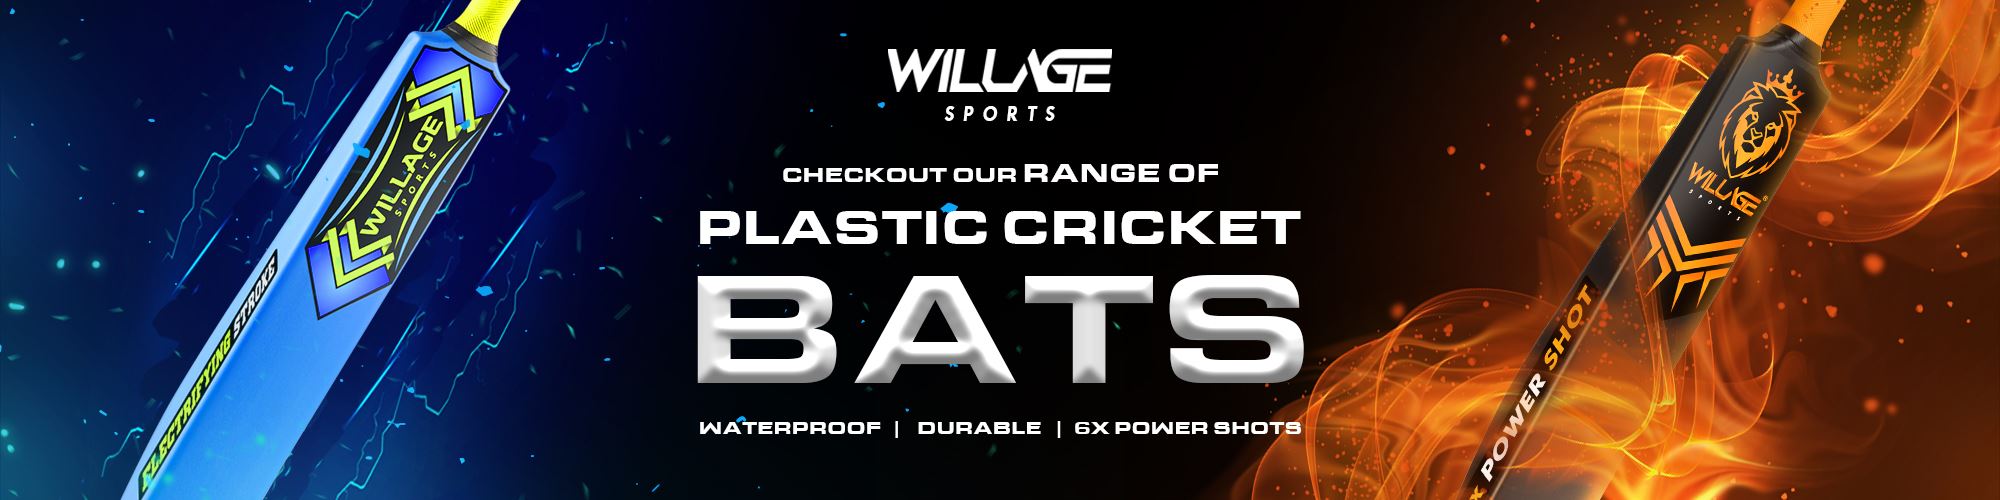 WillAge-Plastic-Cricket-Bats-for-Tennis-Ball-Standard-Full-Size.jpg